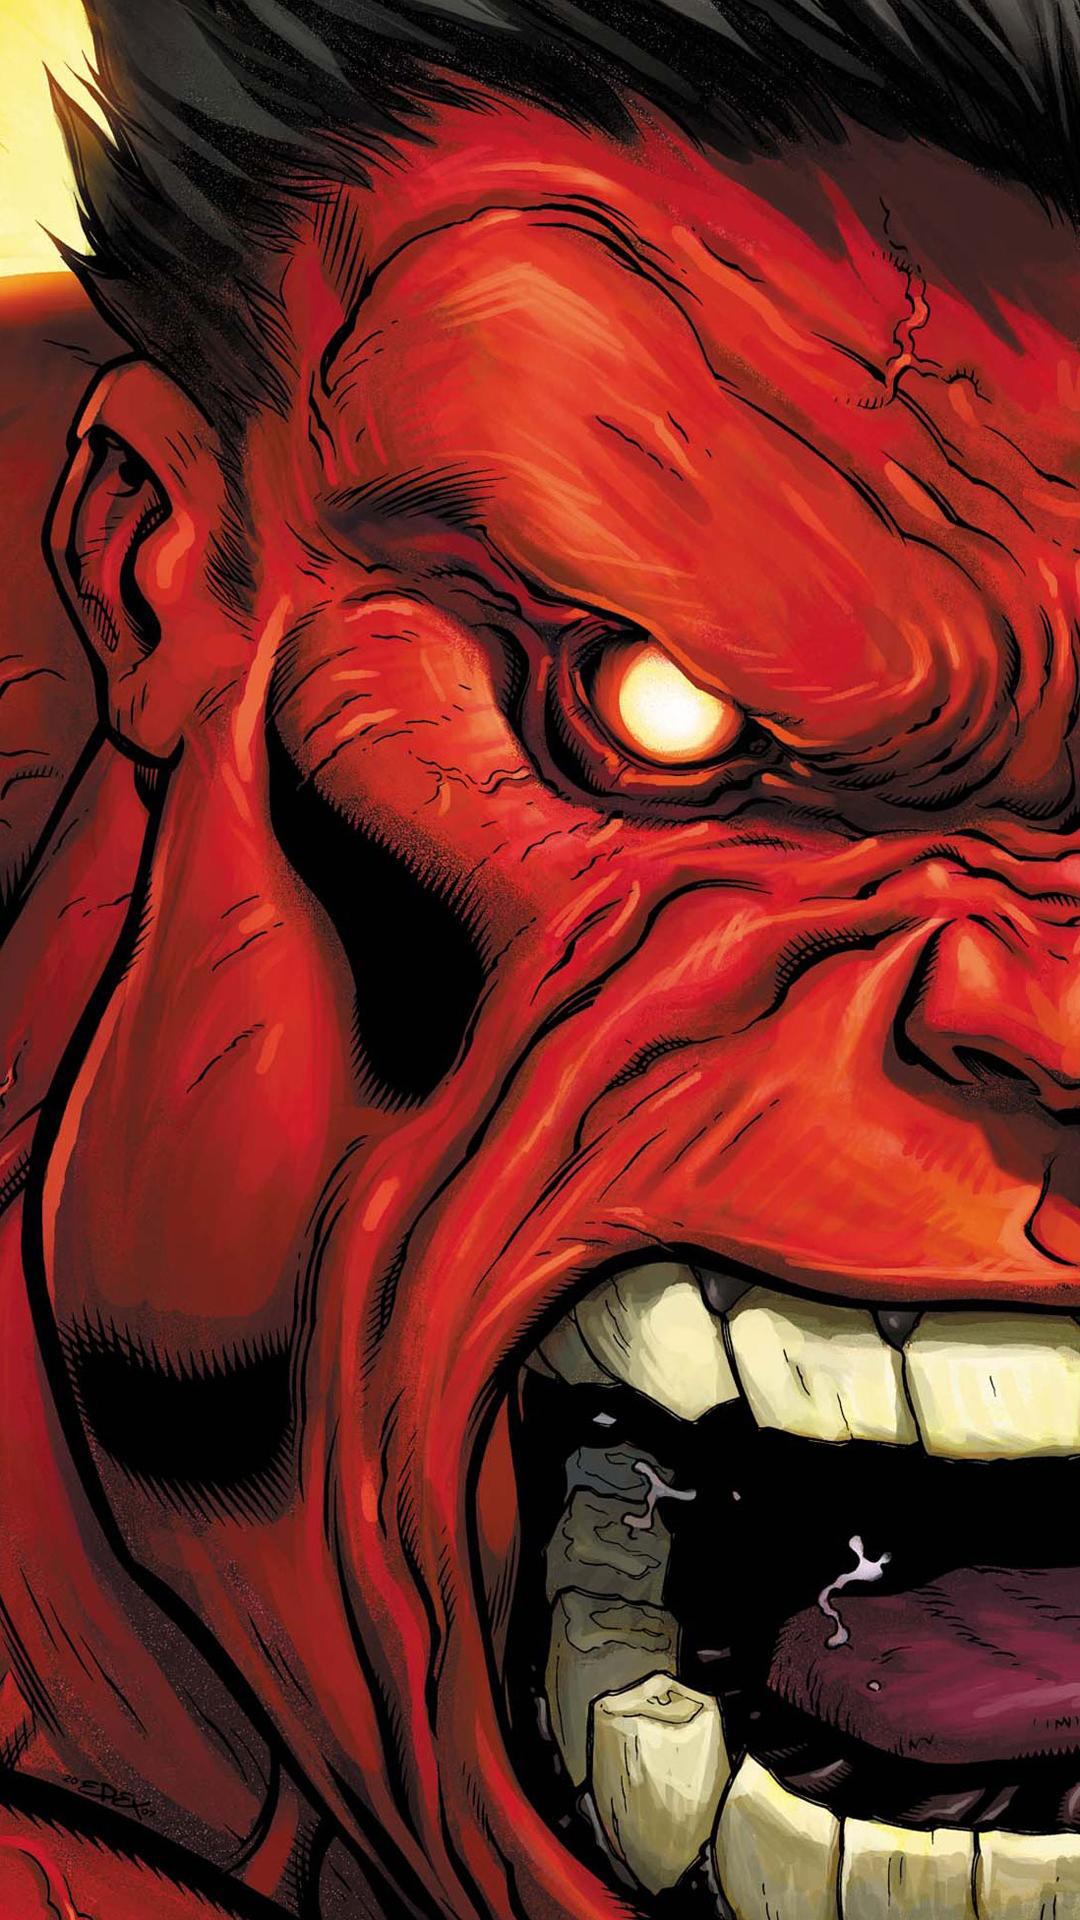 1080 x 1920 · jpeg - Hulk red face HTC hd wallpaper - Best htc one wallpapers